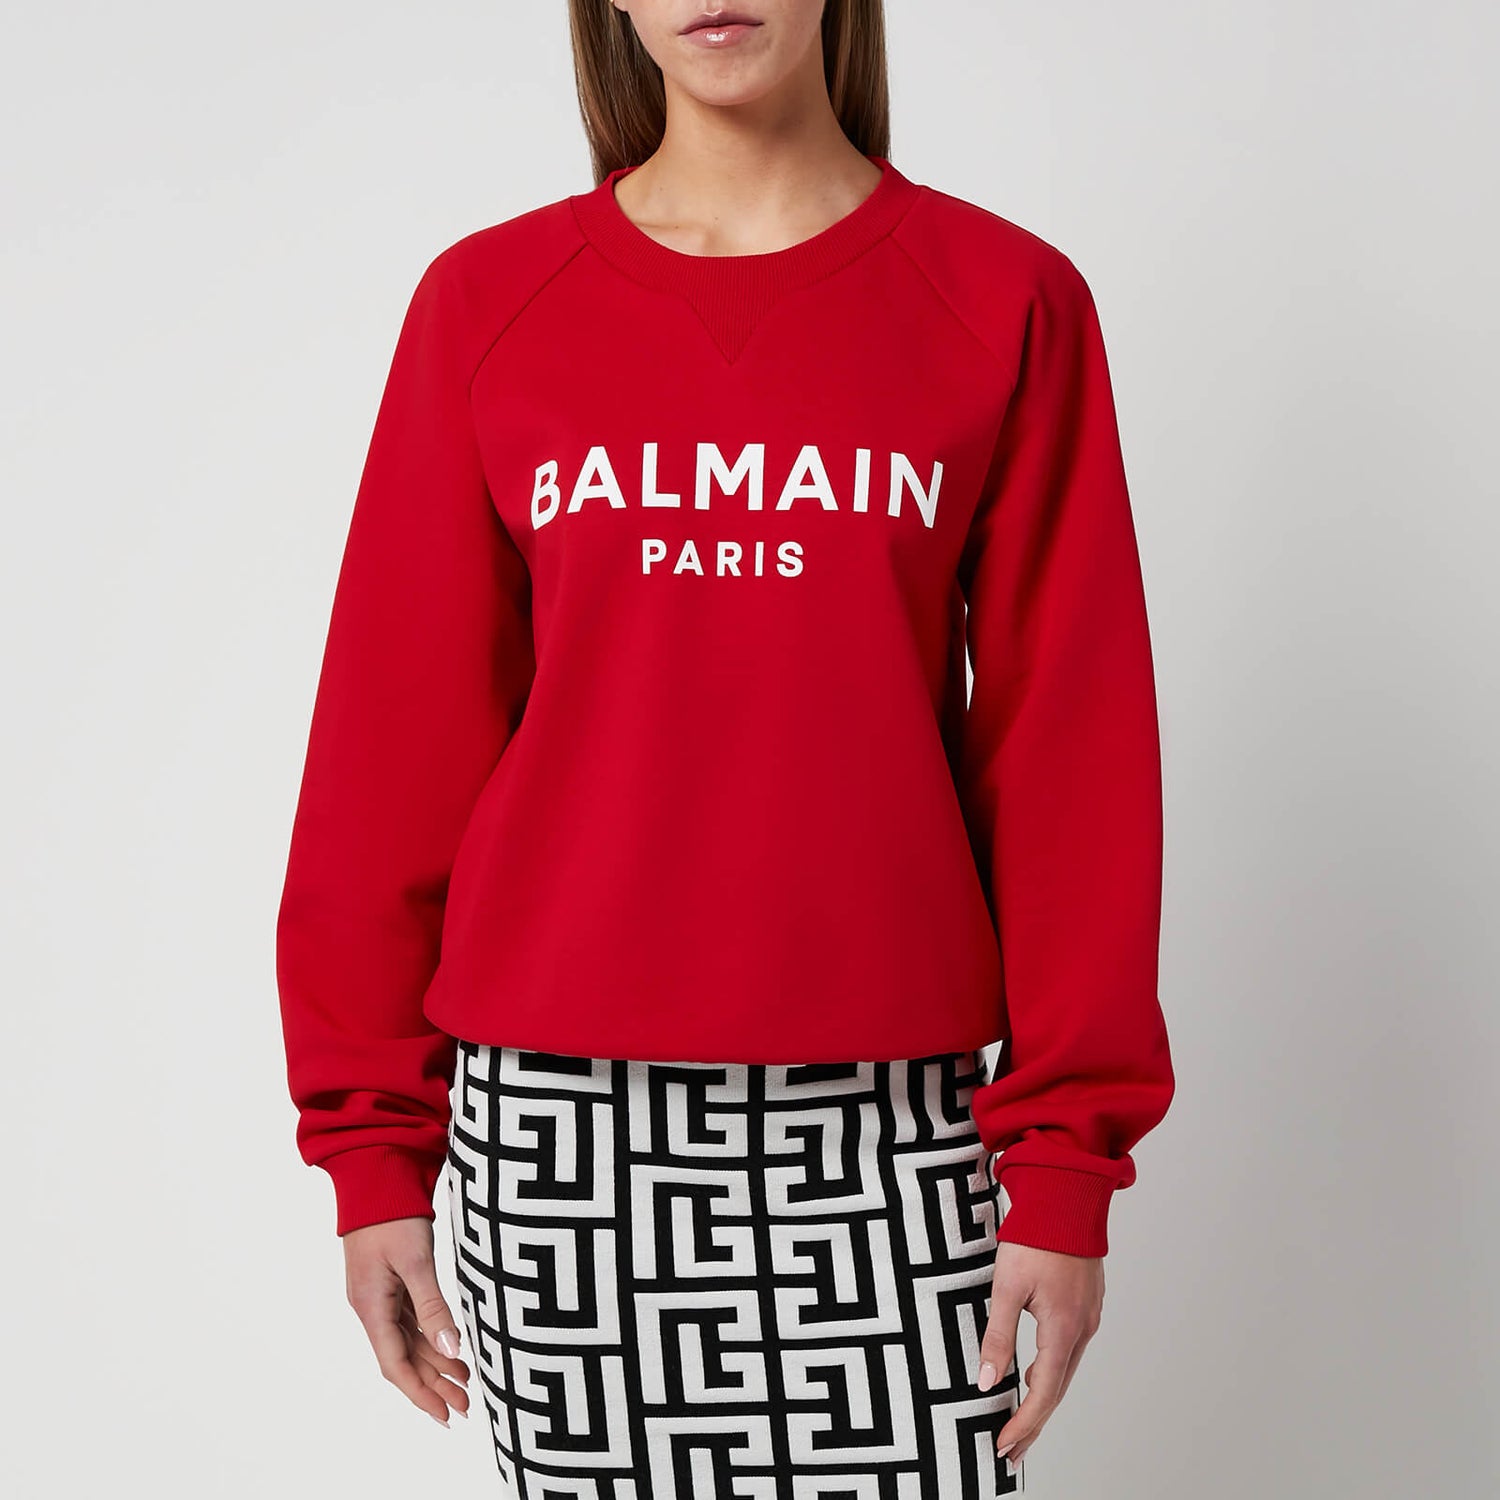 Balmain Women's Printed Balmain Sweatshirt - Rouge/Blanc